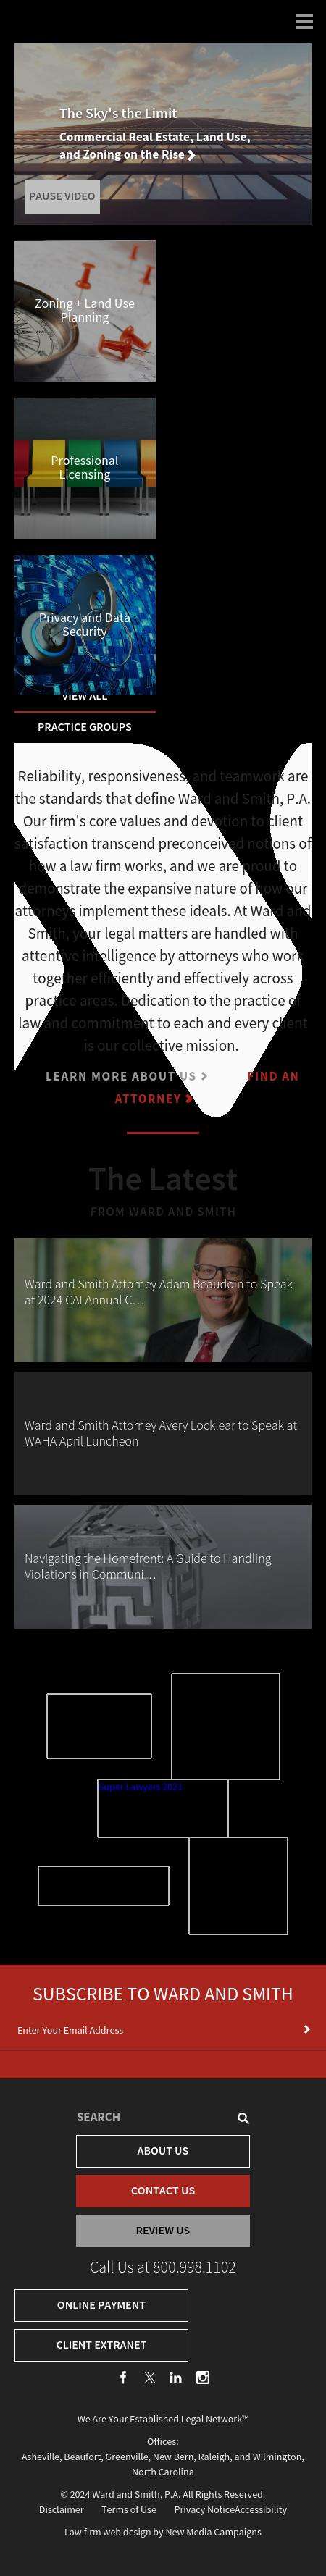 Ward and Smith PA - Raleigh NC Lawyers